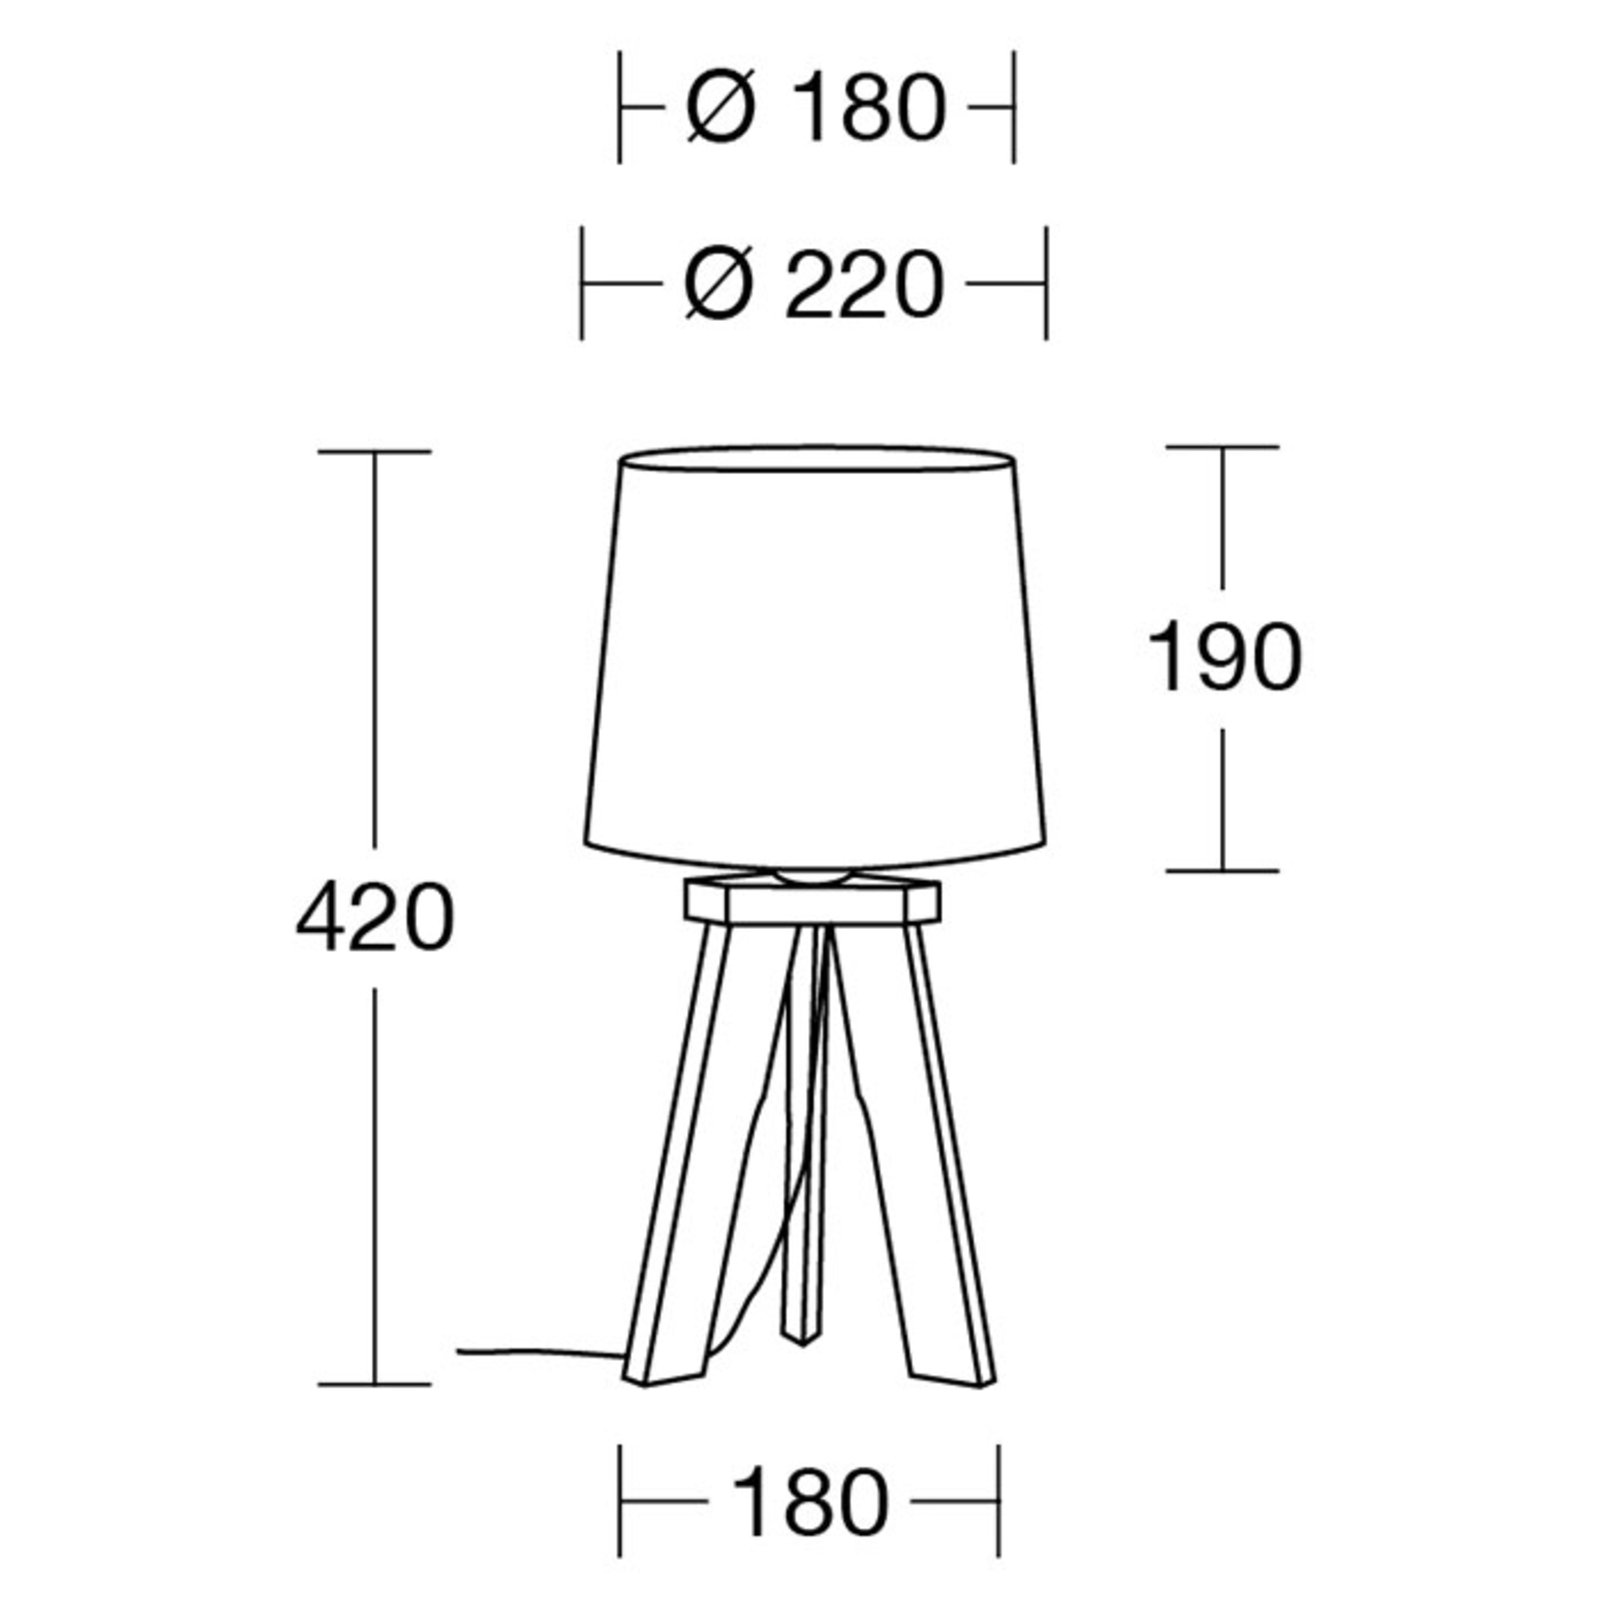 HerzBlut Tre lampe table chêne nat. blanche, 42 cm